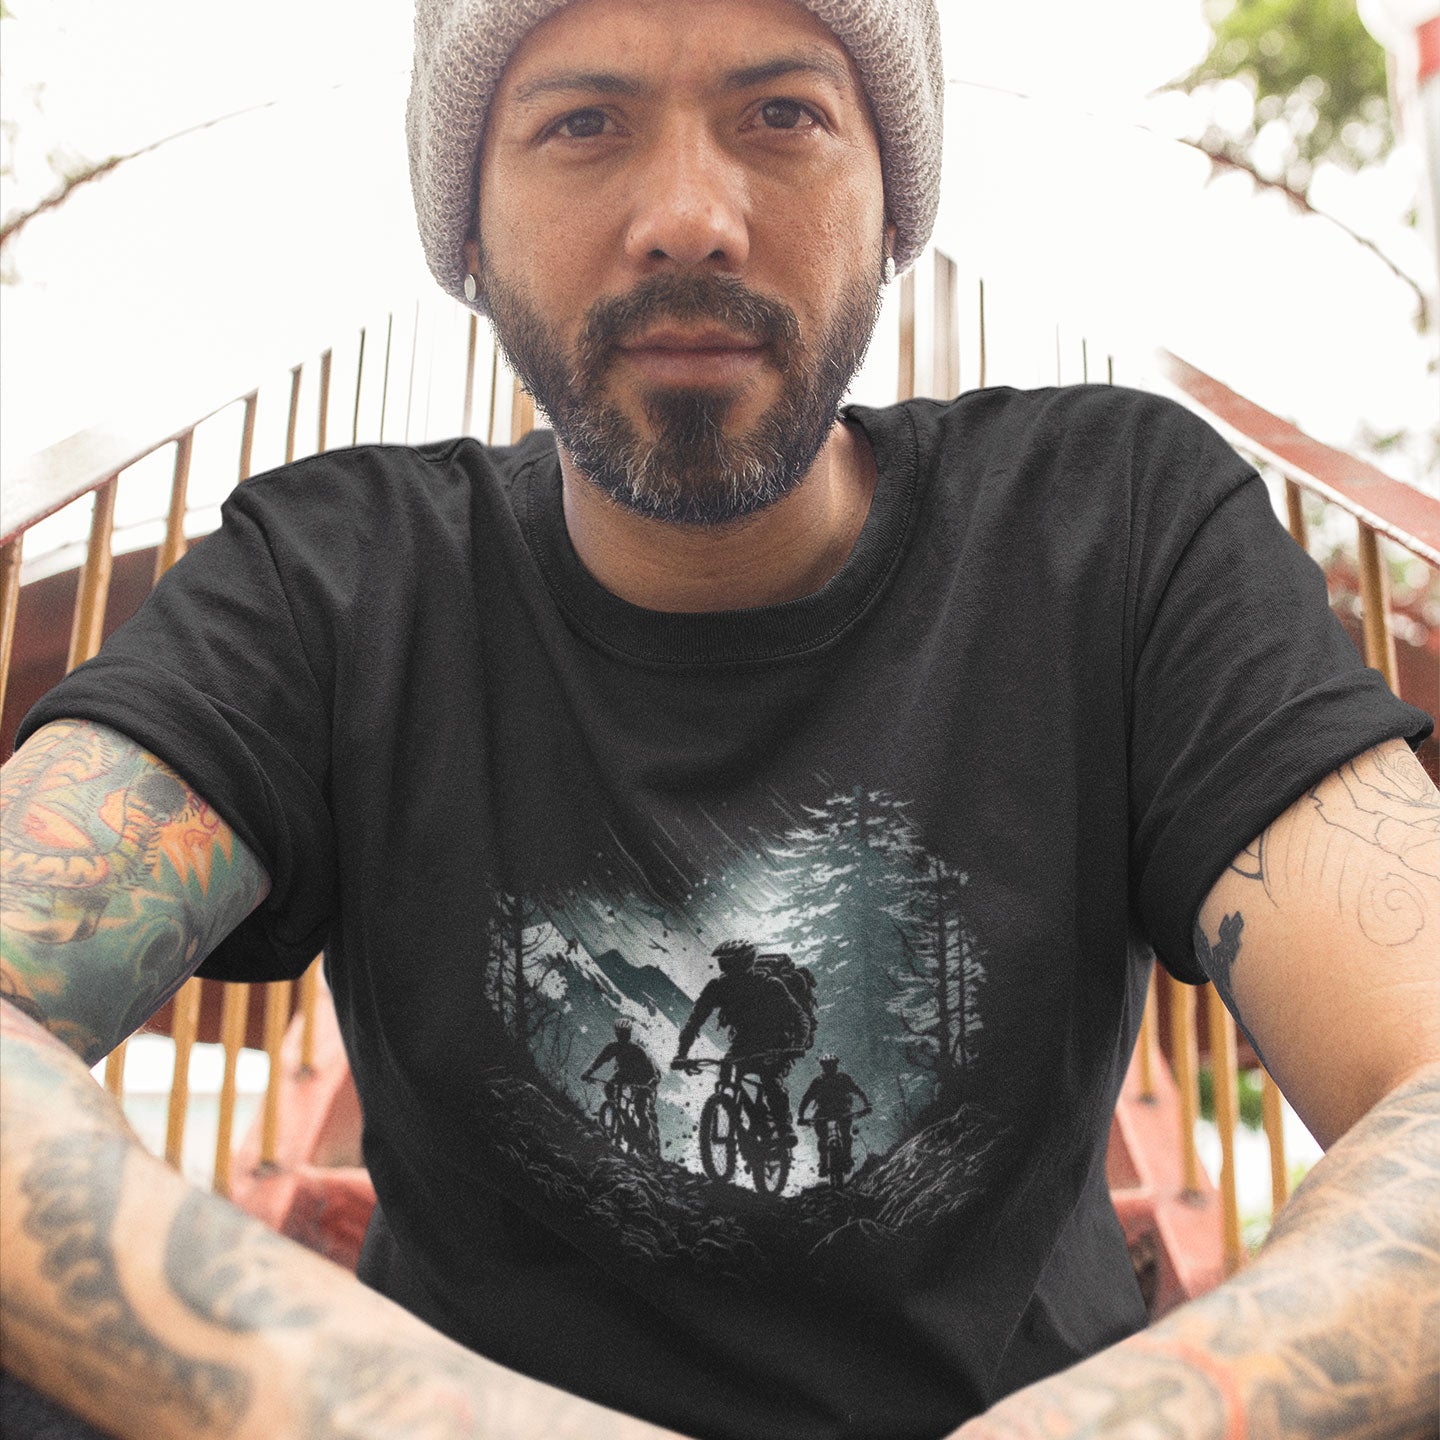 Tattooed man wearing a black t-shirt with a mountain bike print 